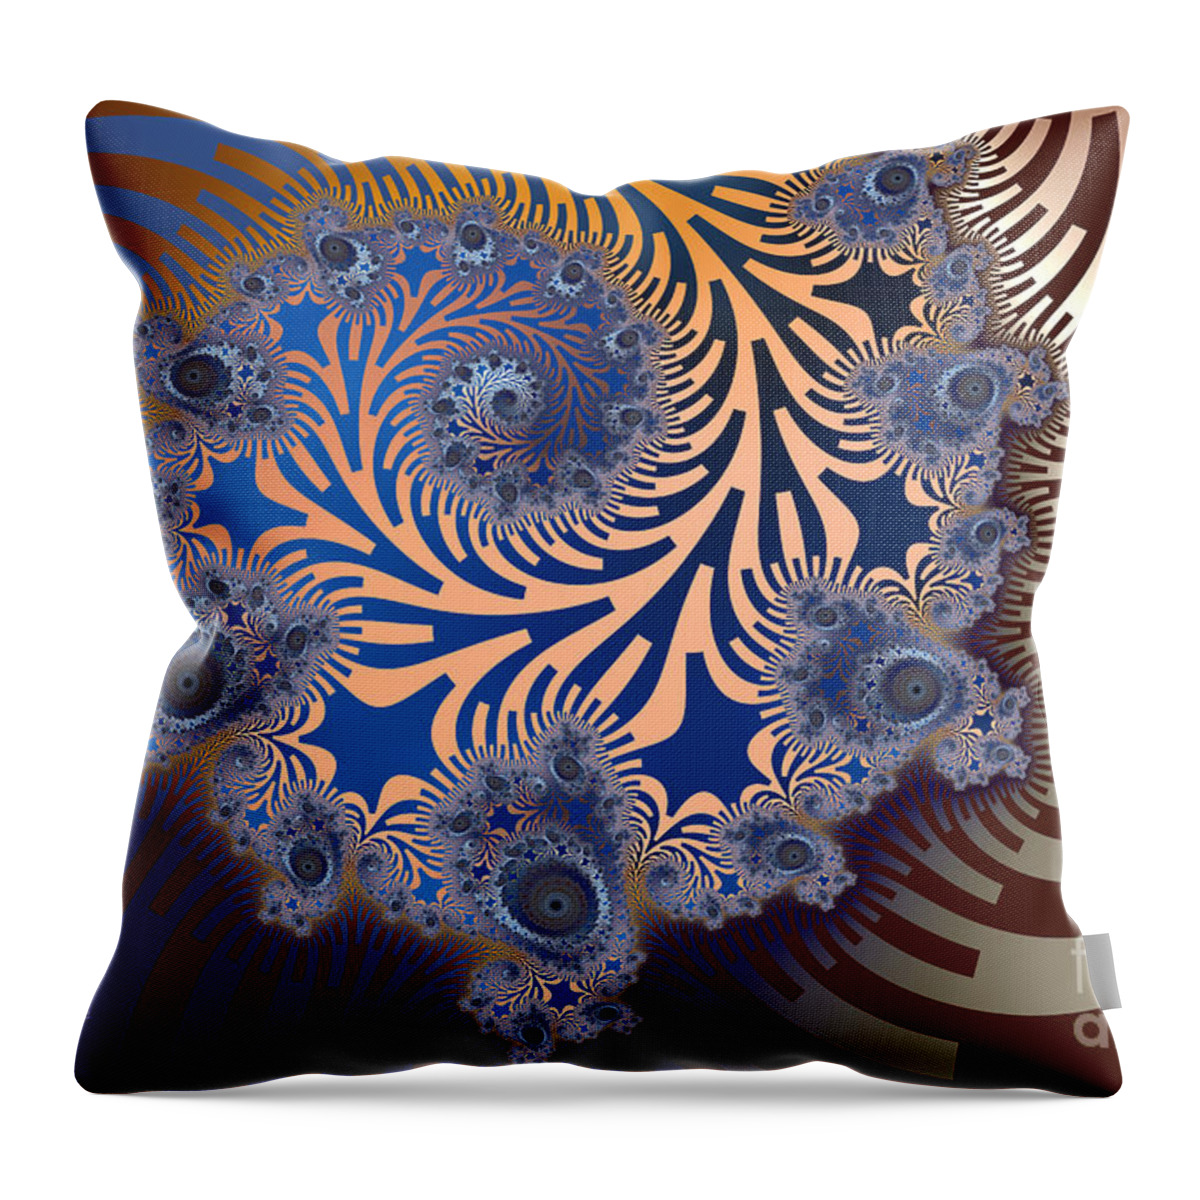 Abstract Throw Pillow featuring the digital art Ornamental by Karin Kuhlmann